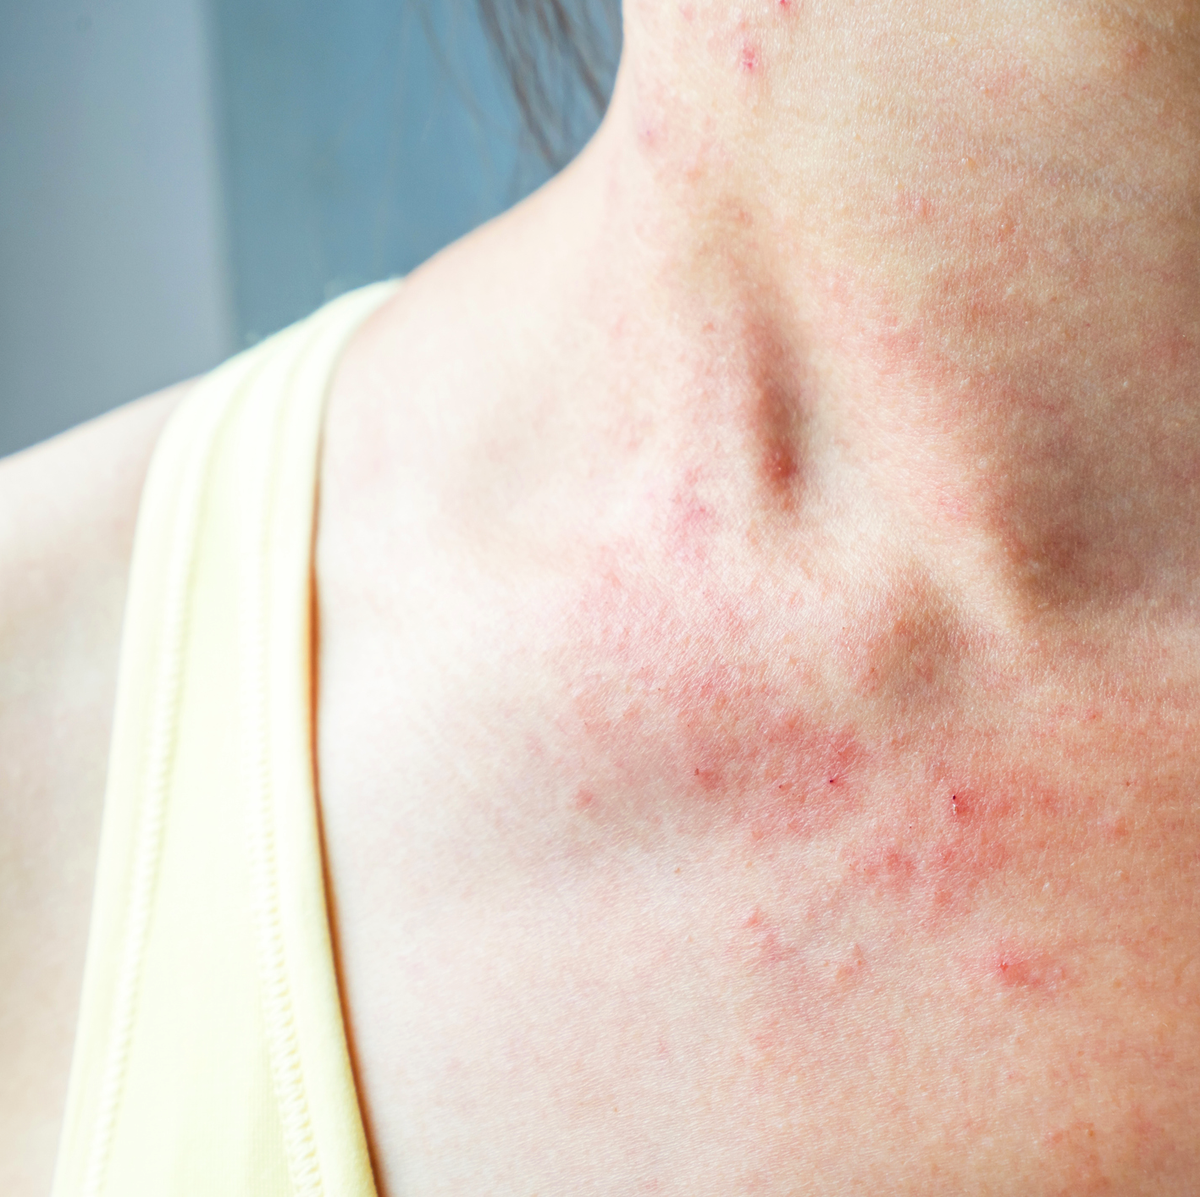 Common Skin Rash Pictures How to ID Skin Rash Symptoms